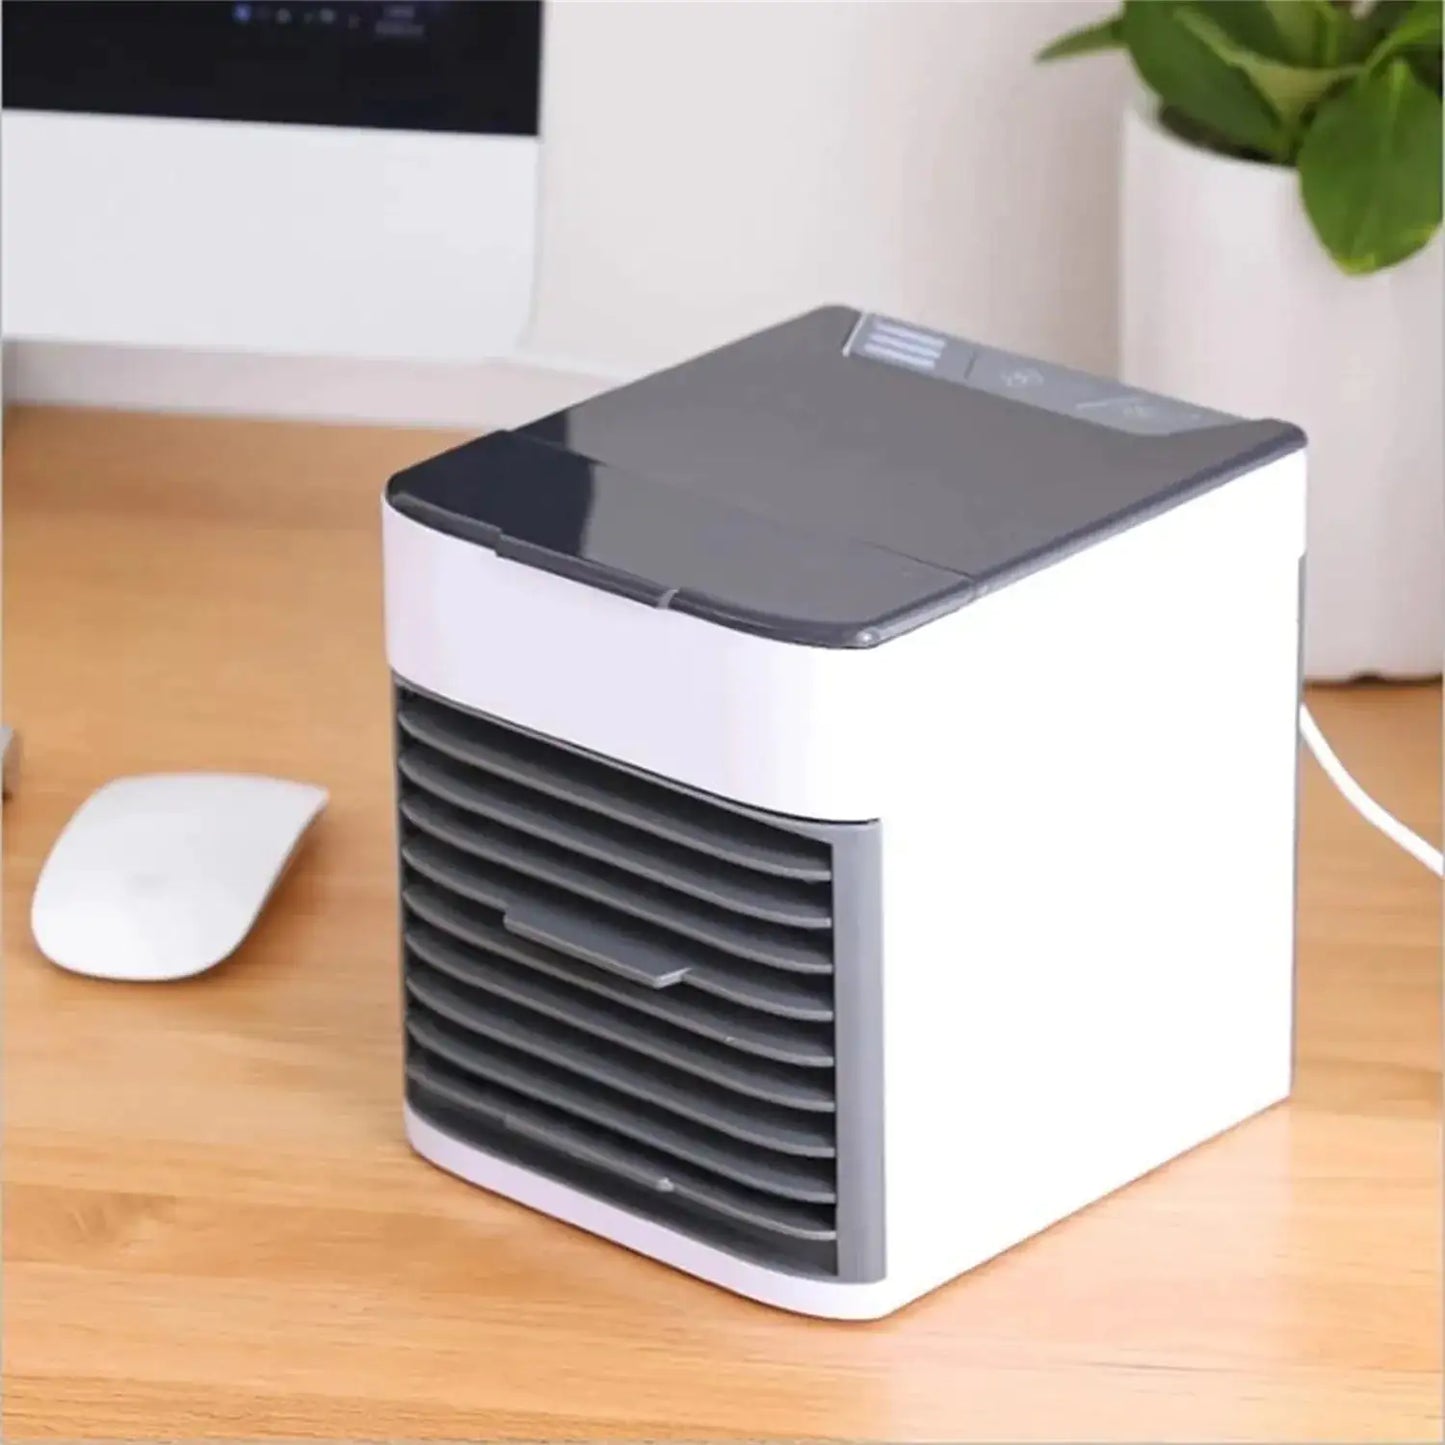 Flip Air™ Portable Air Conditioner